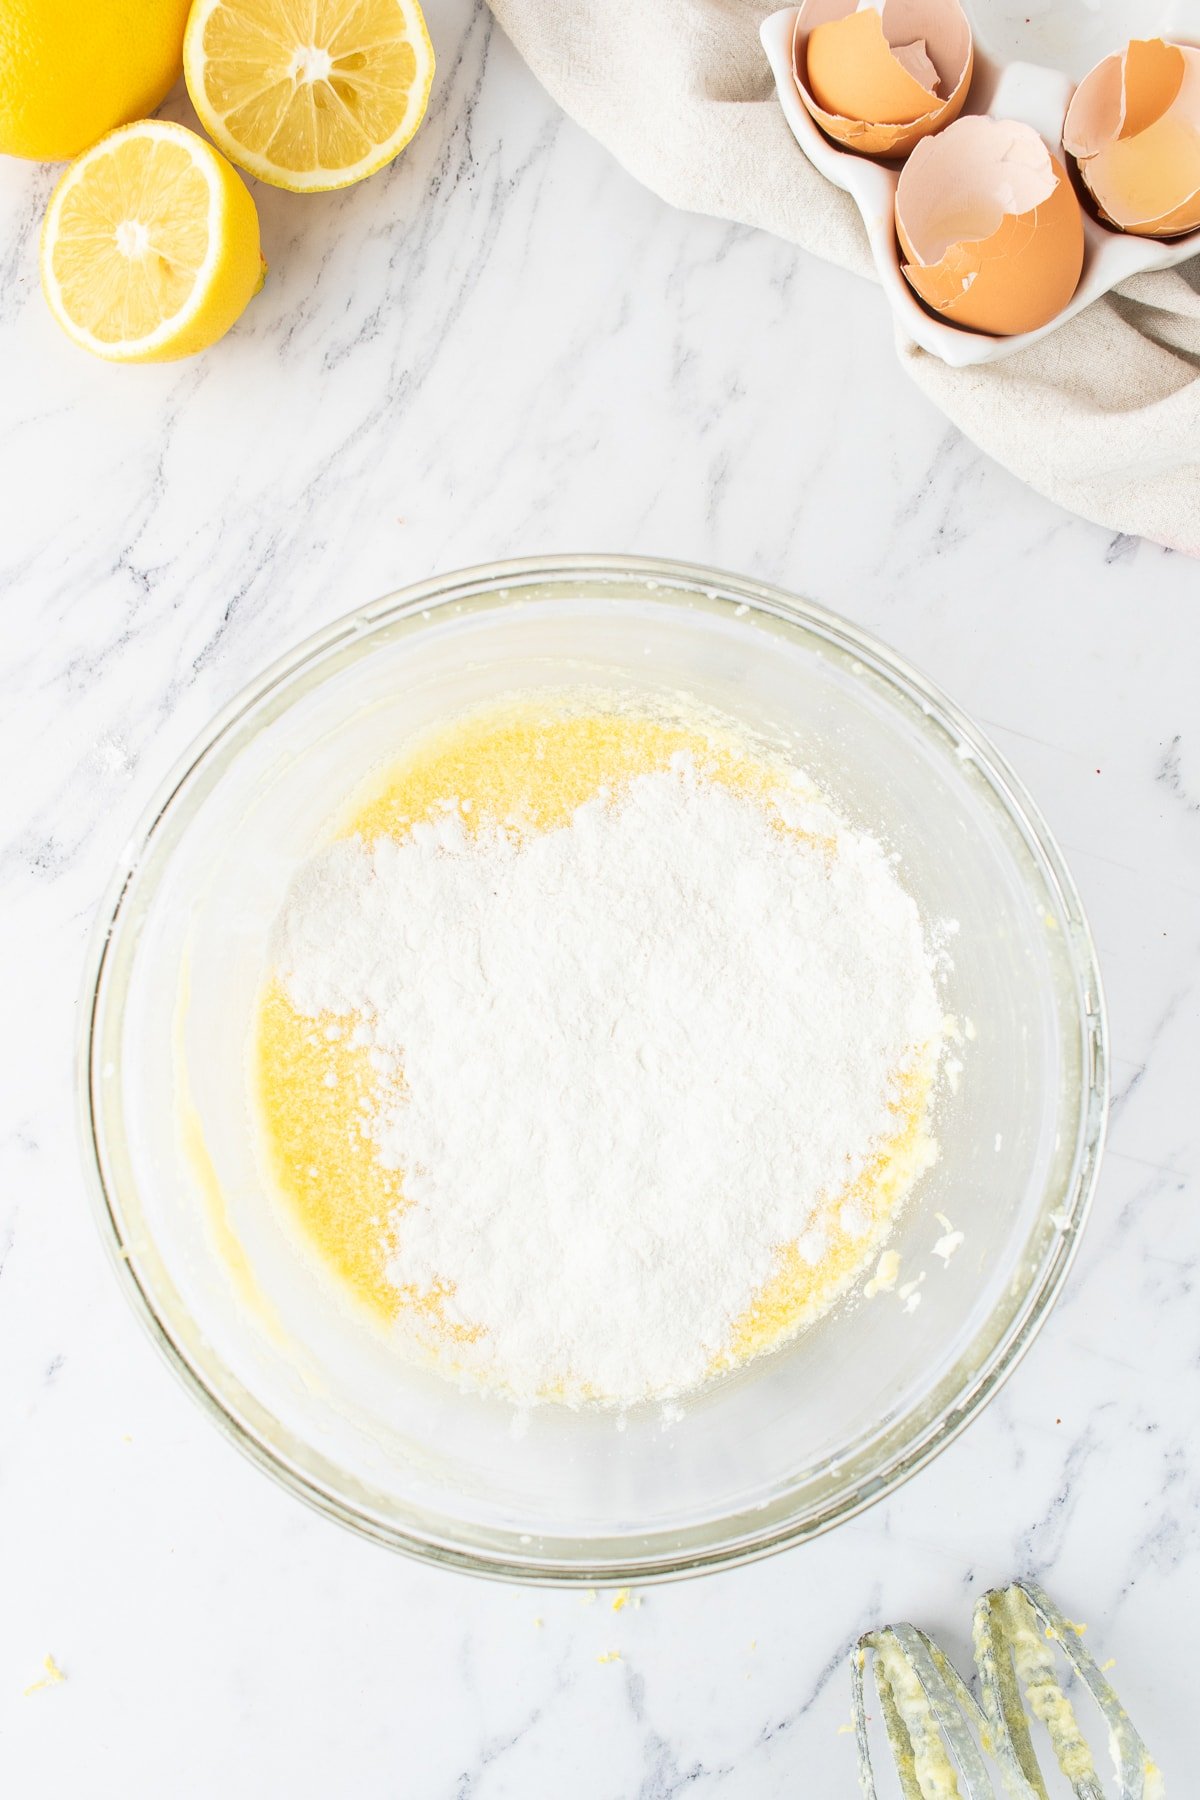 flour added to mixing bowl for lemon pound cake